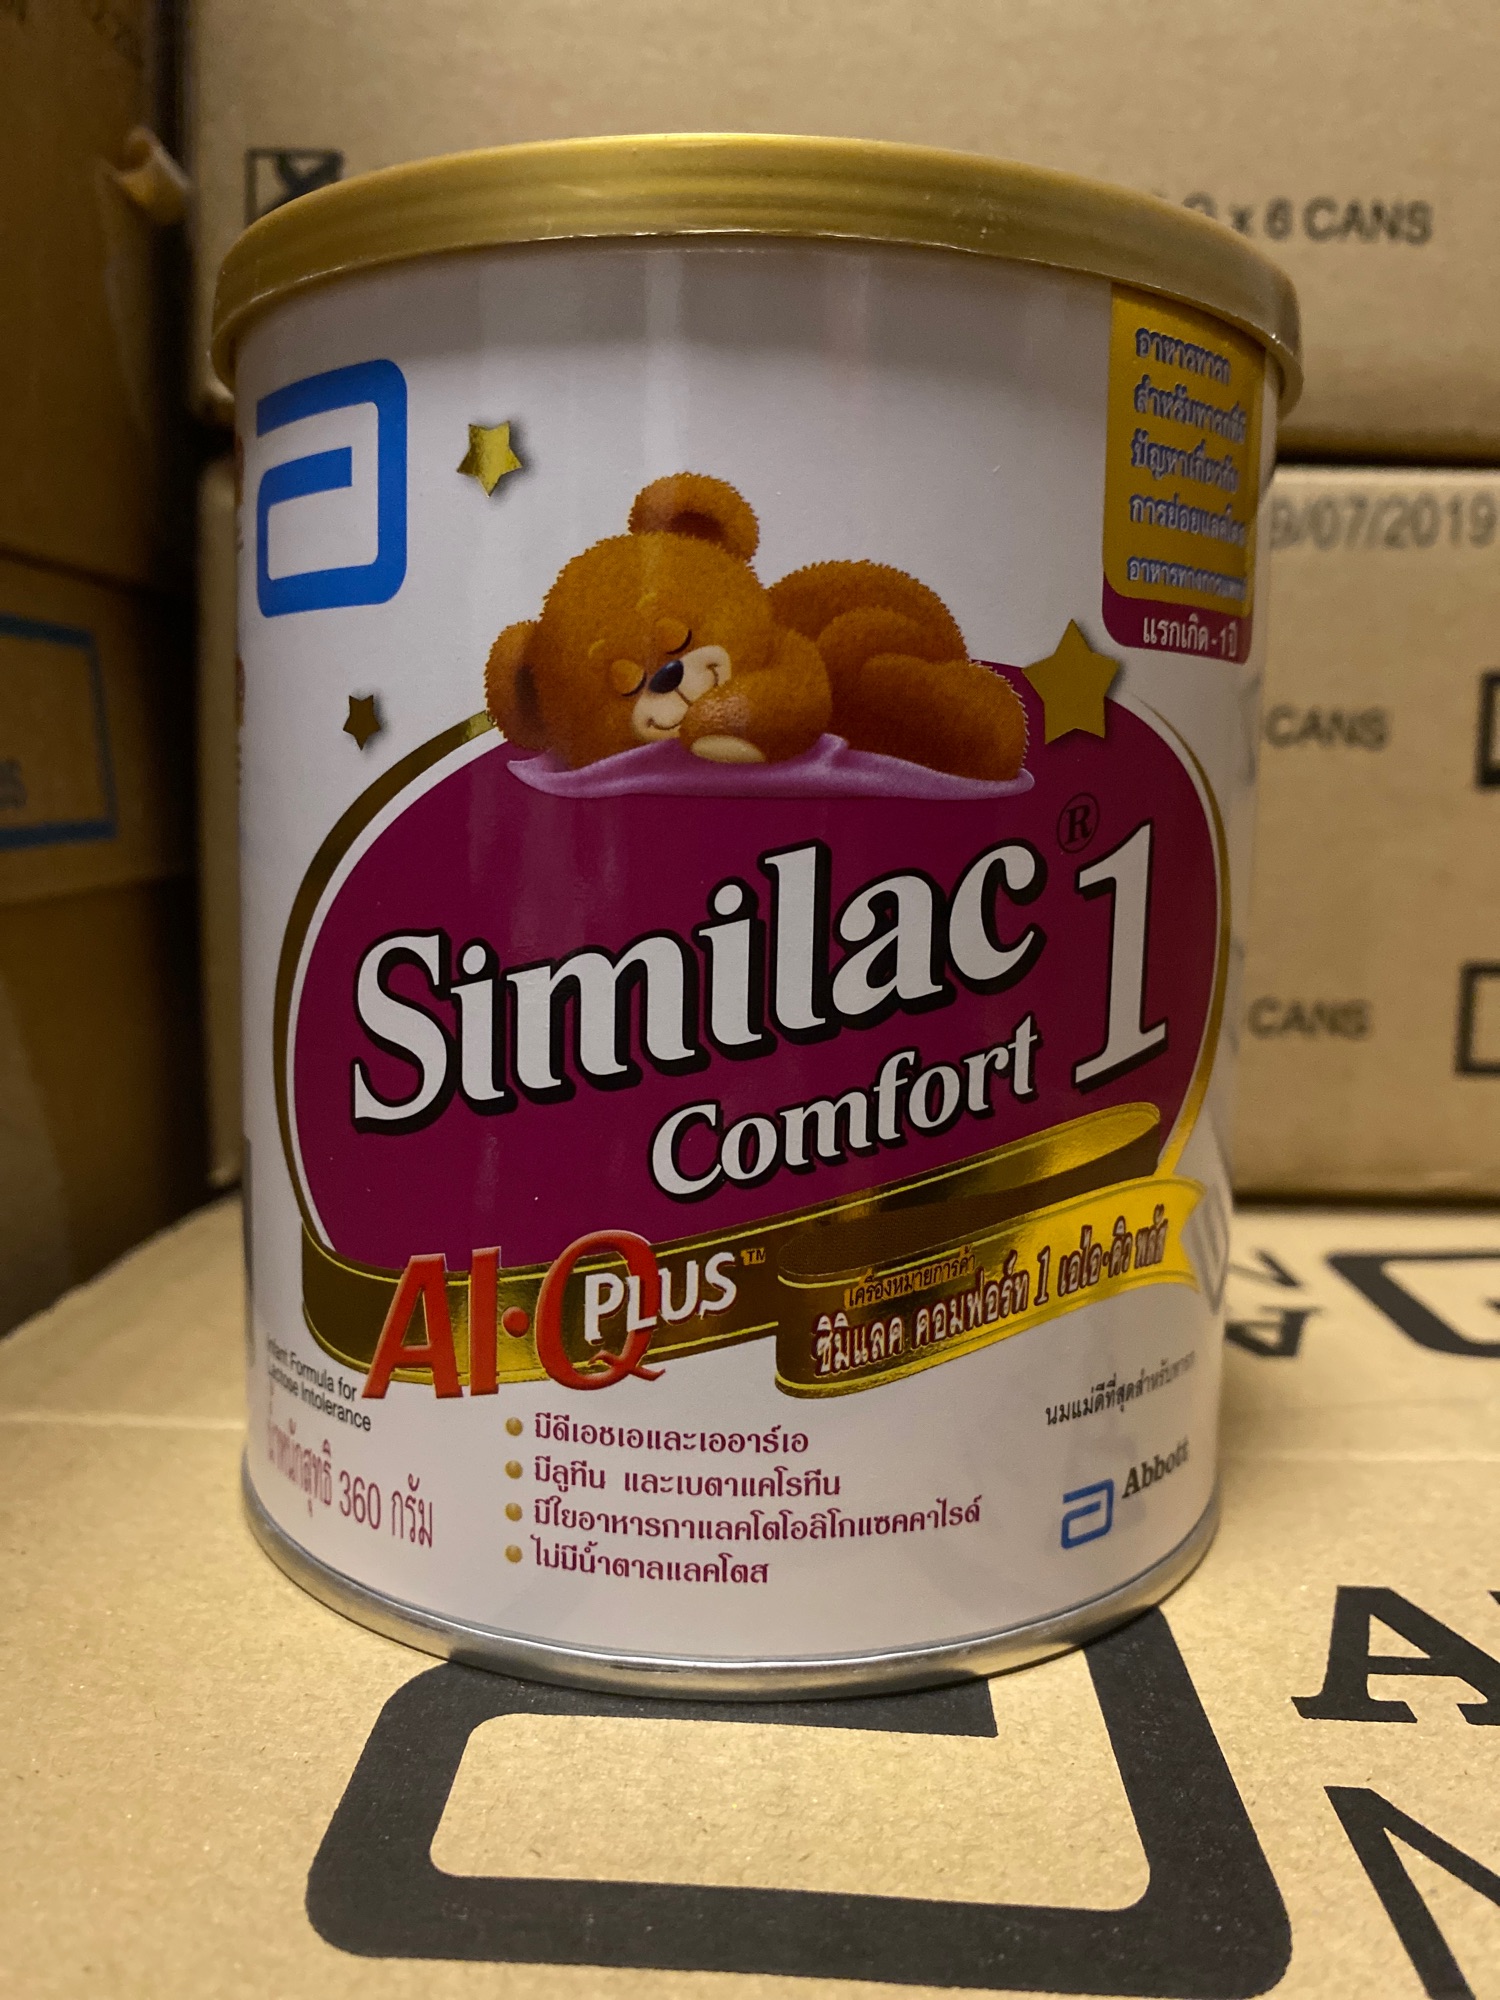 Similac Comfort 1 ซิมิแลค คอมฟอร์ท 1 ขนาด 360 กรัม Exp.6/2023